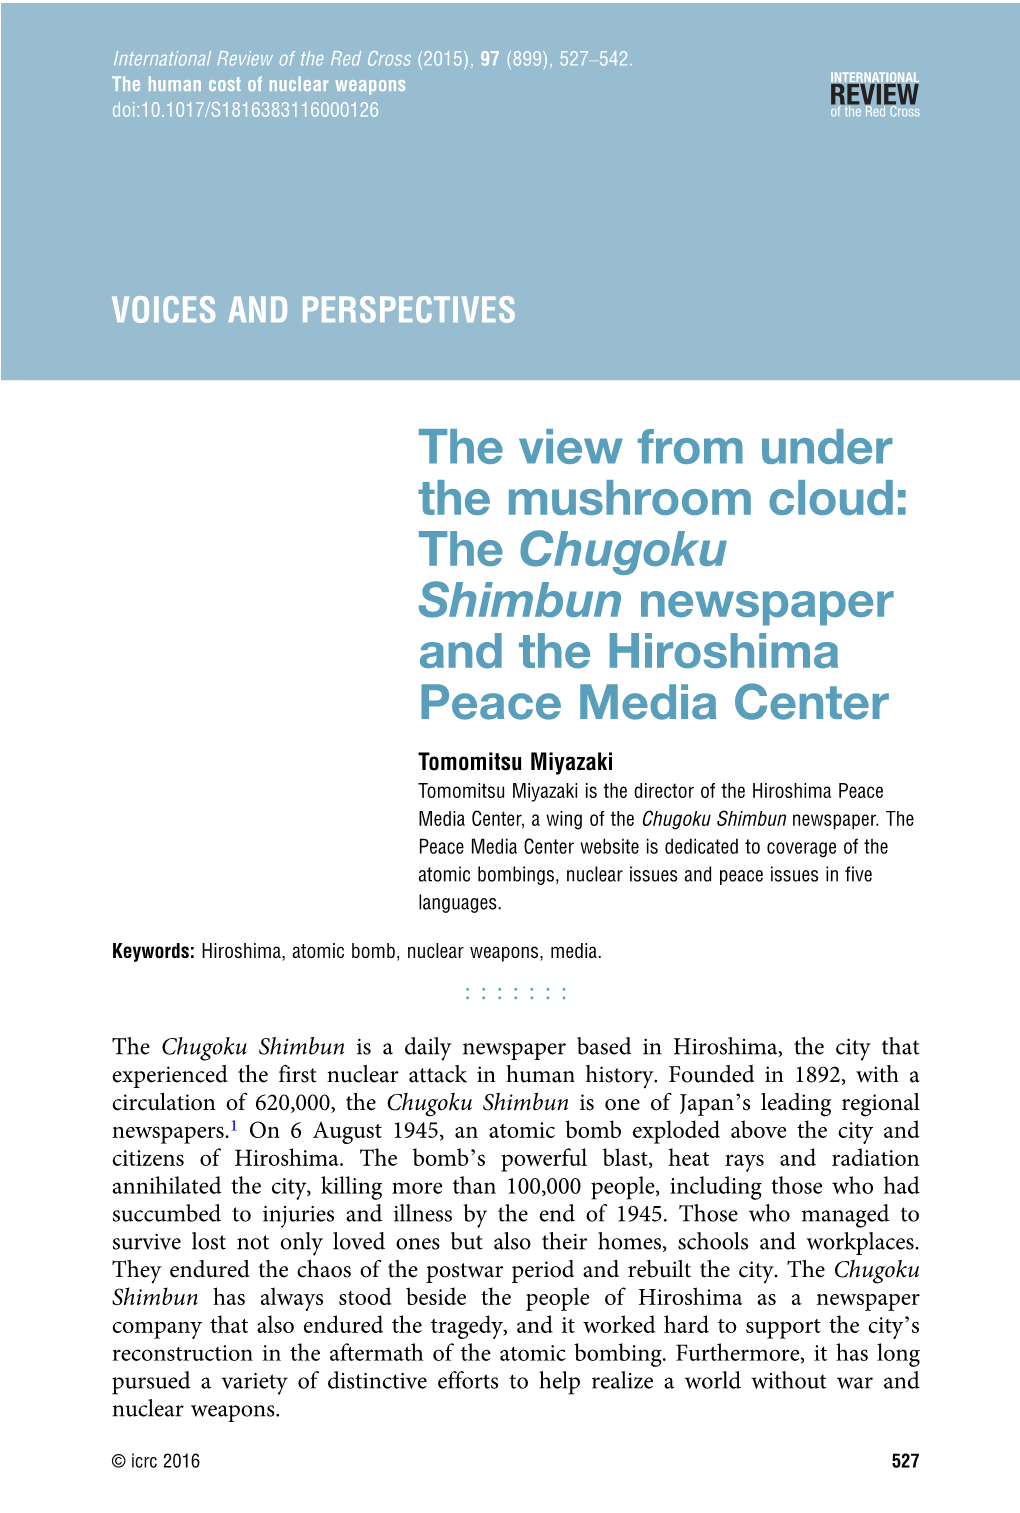 The View from Under the Mushroom Cloud: the Chugoku Shimbun Newspaper and the Hiroshima Peace Media Center